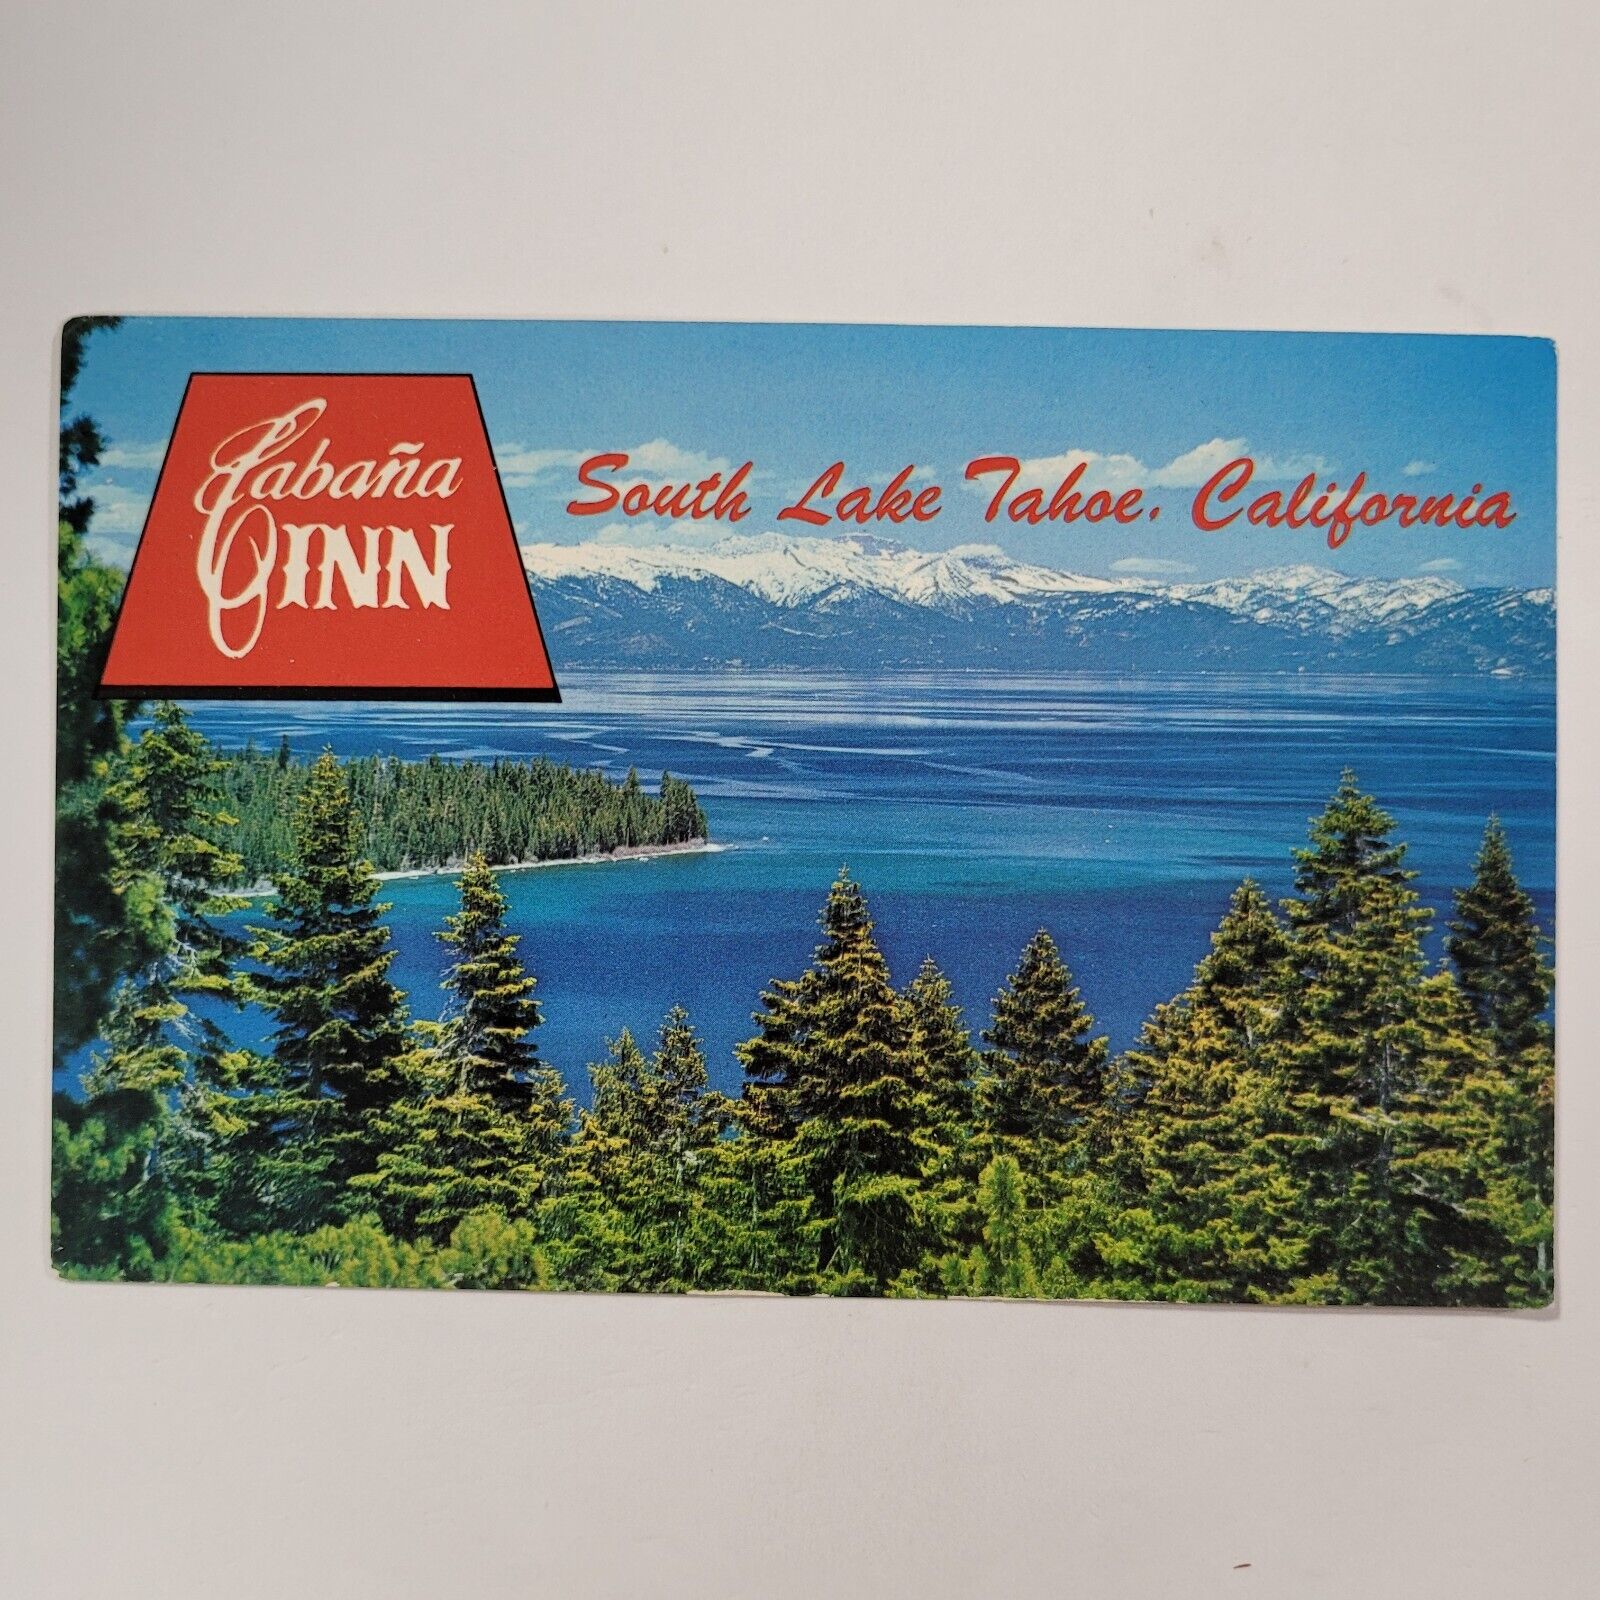 Cabana Inn South Lake Tahoe California CA Vintage Postcard Heated Pool Color TV